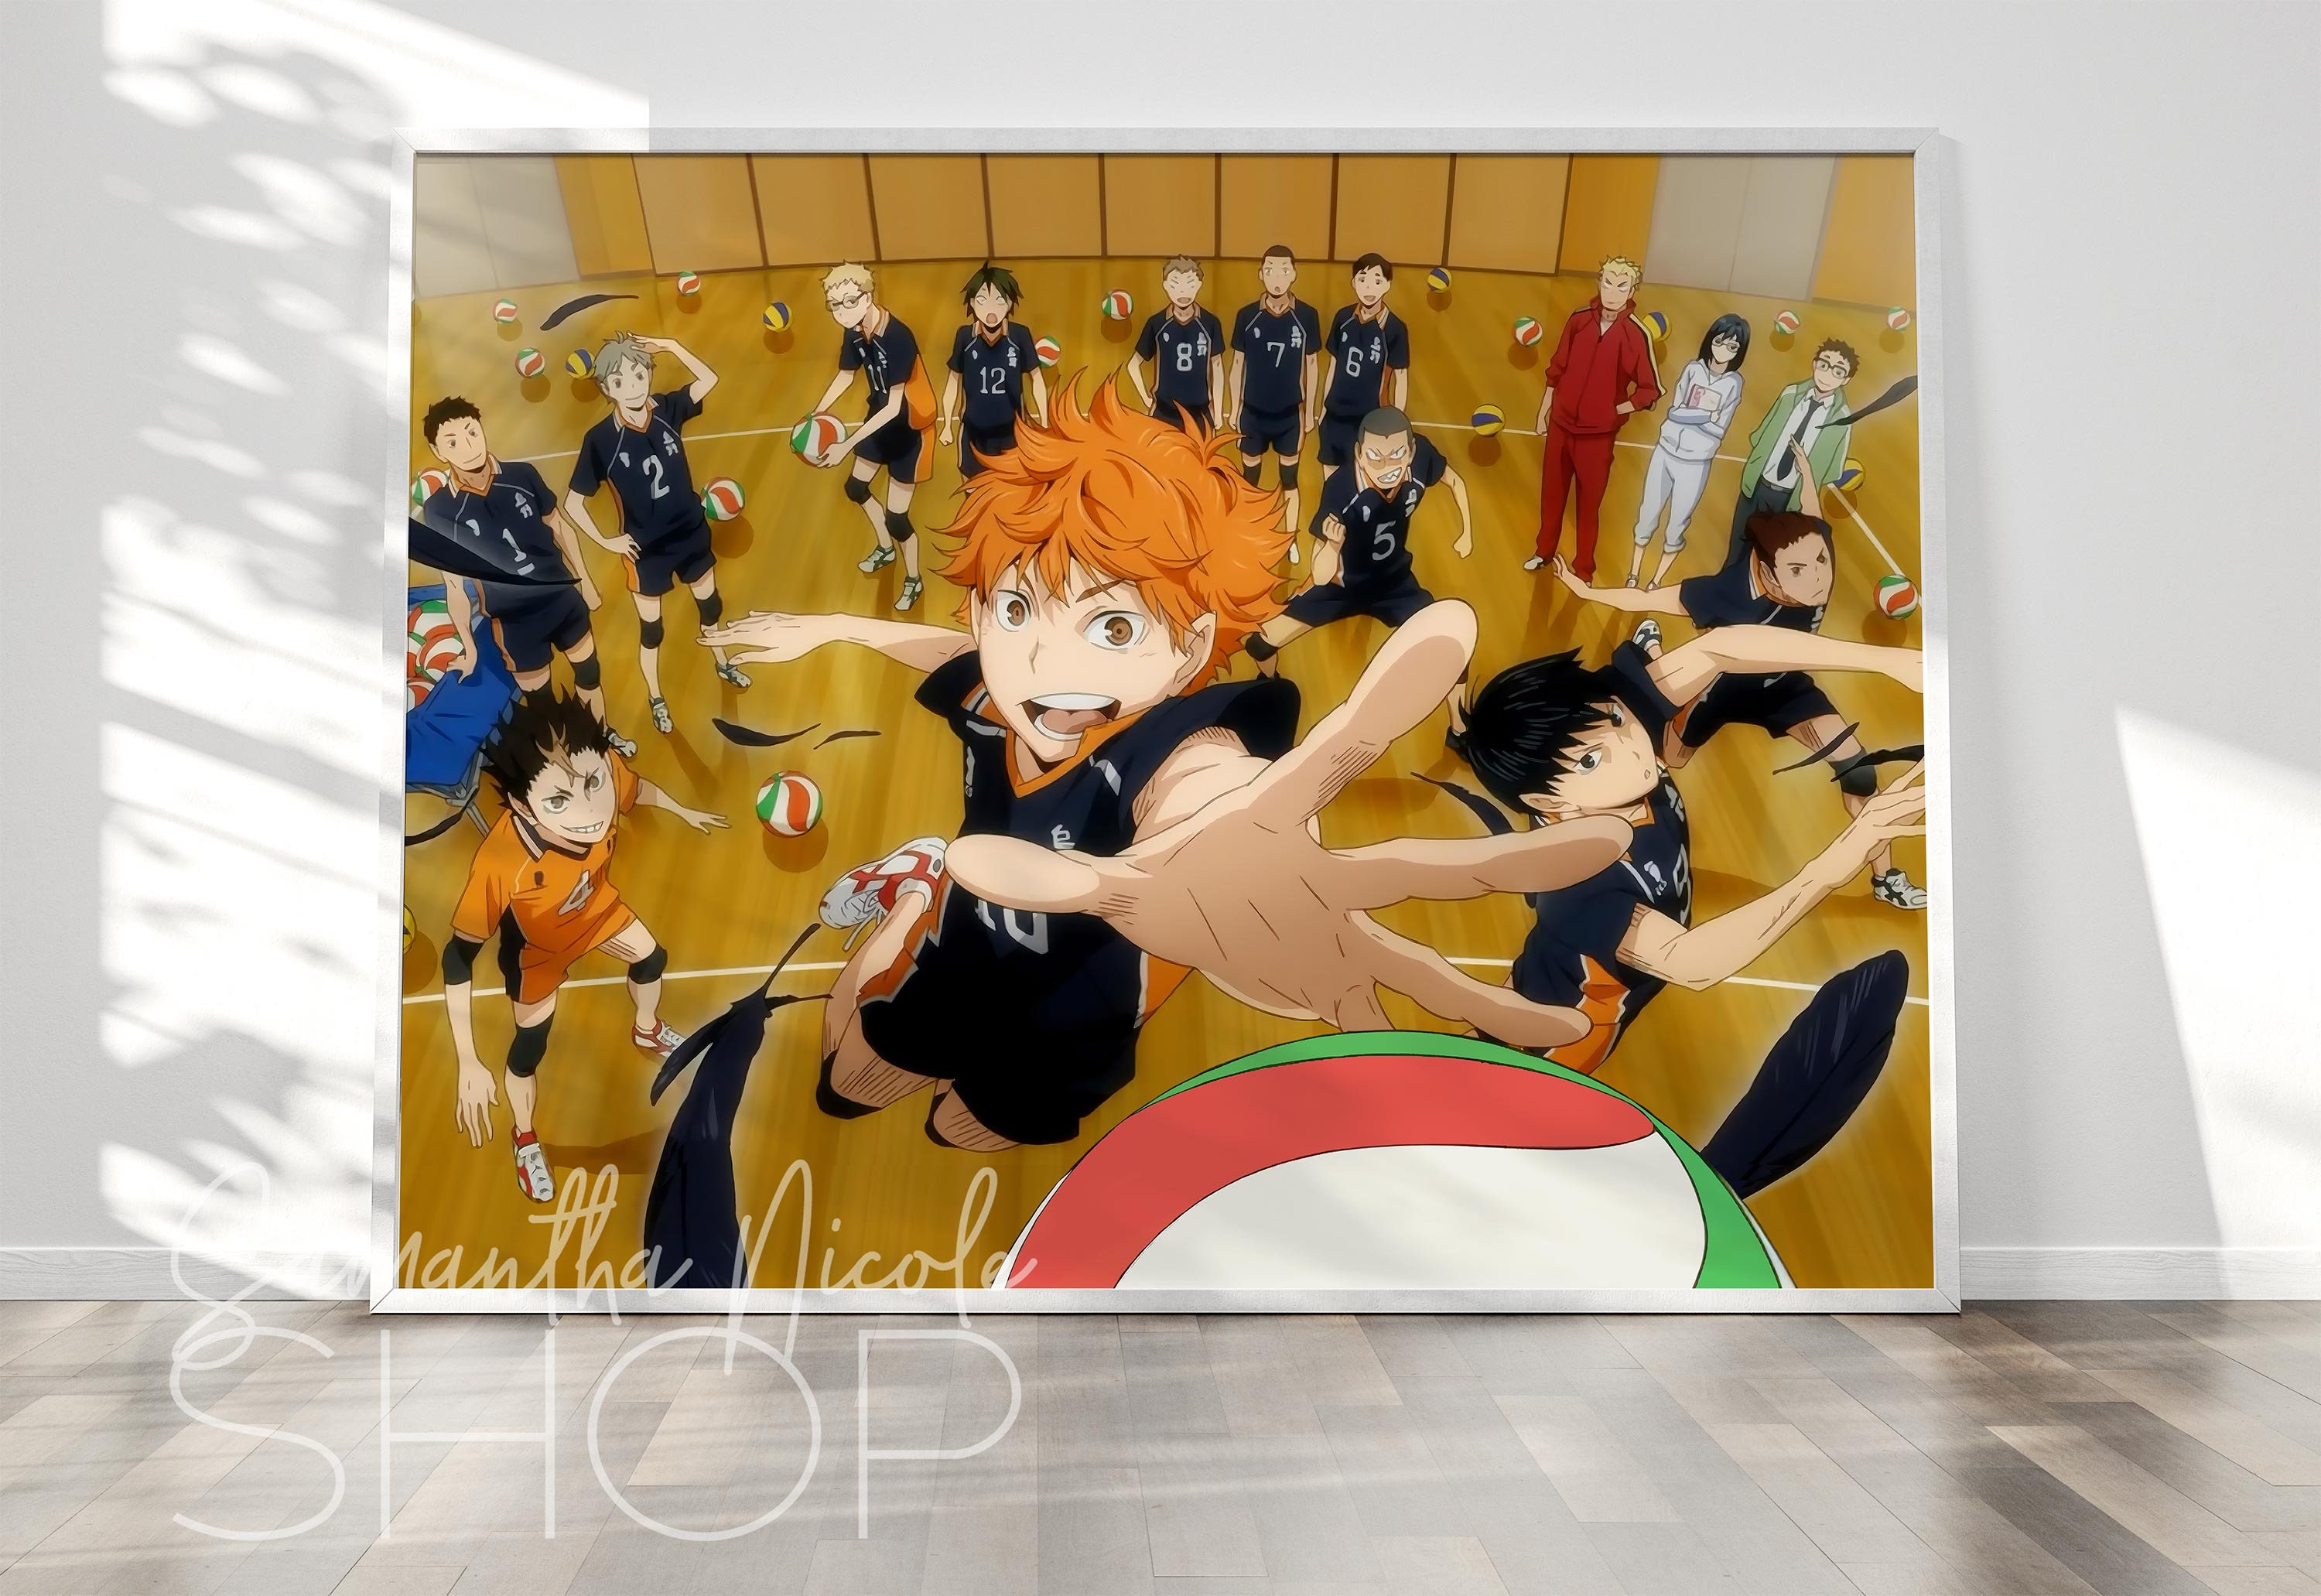 Anime Haikyuu Hinata Shoyo Svg, To The Top Svg, Volleyball - Inspire Uplift